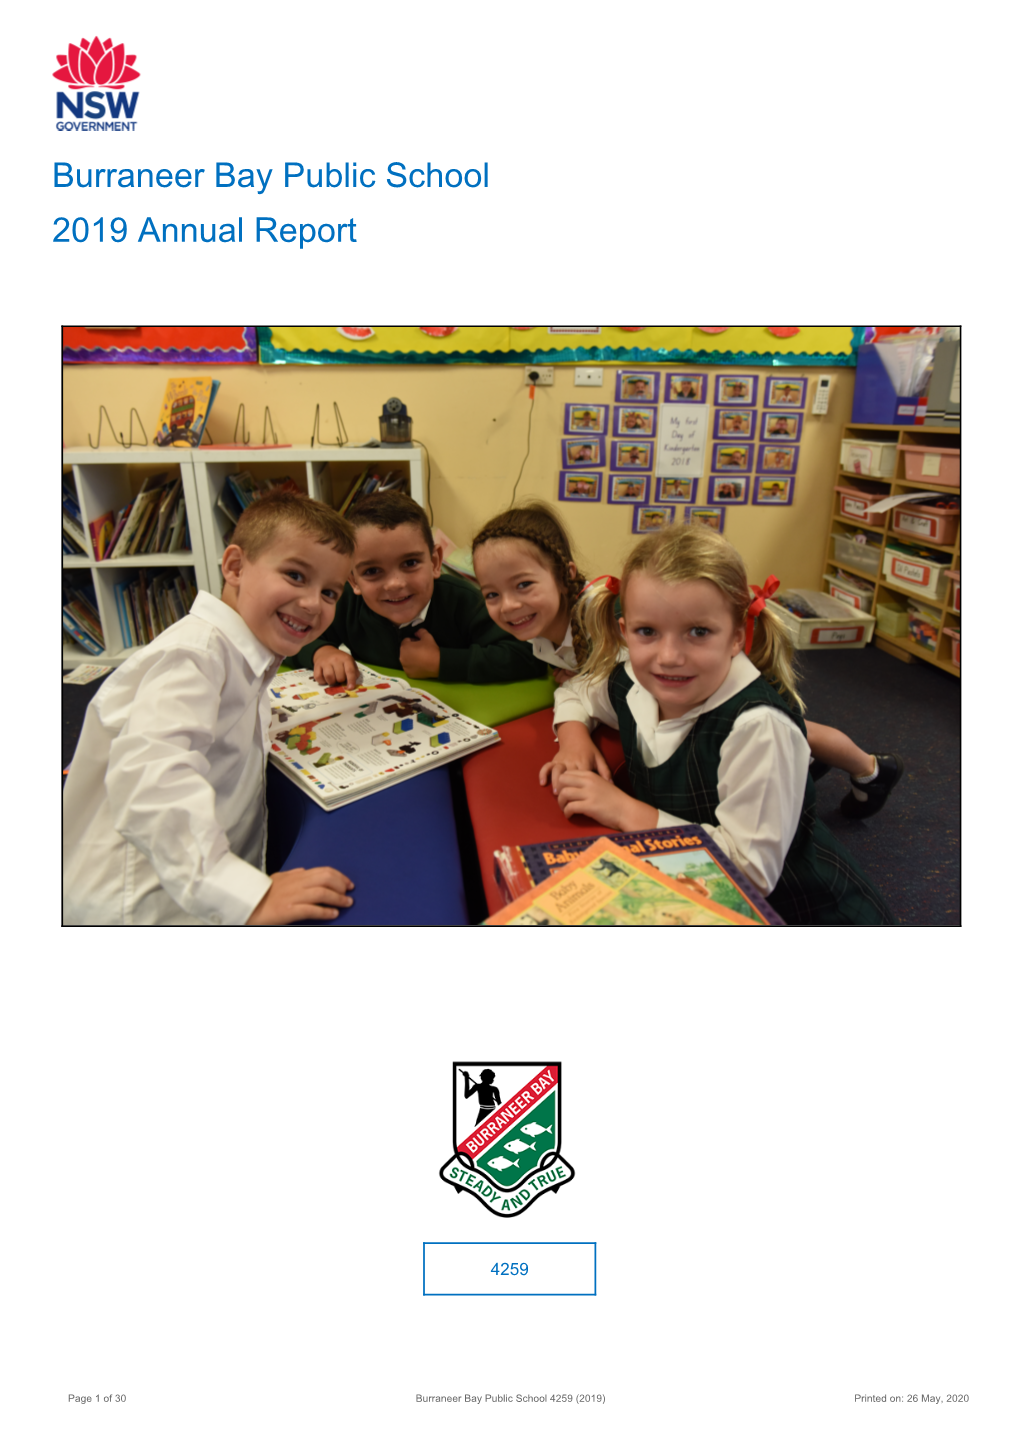 2019 Burraneer Bay Public School Annual Report